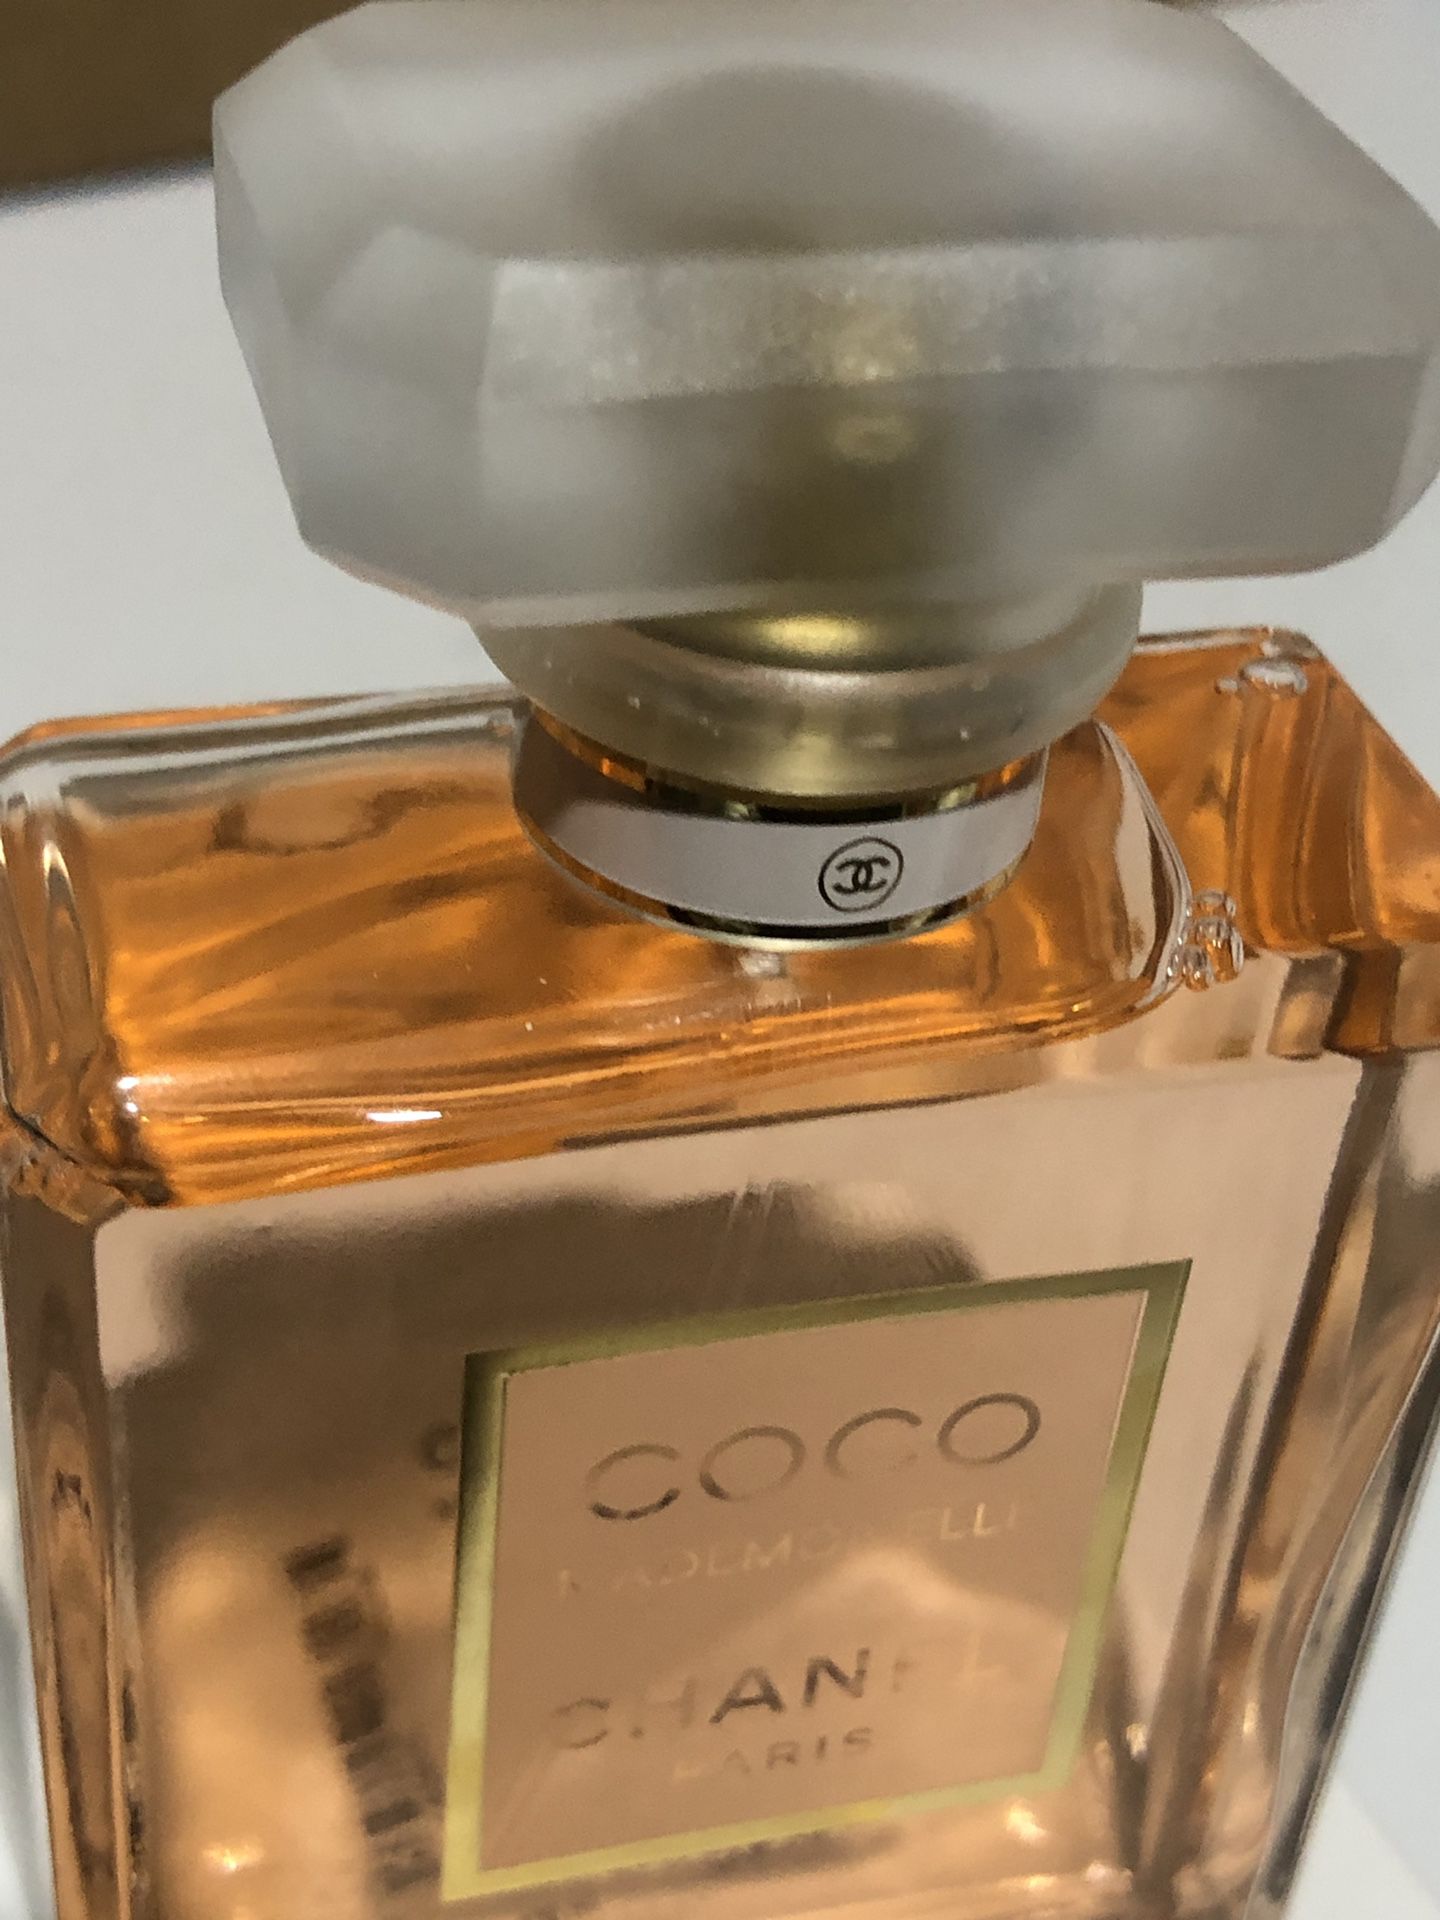 Chanel Coco Mademoiselle Eau De Parfum EDP 3.4oz / 100 ml